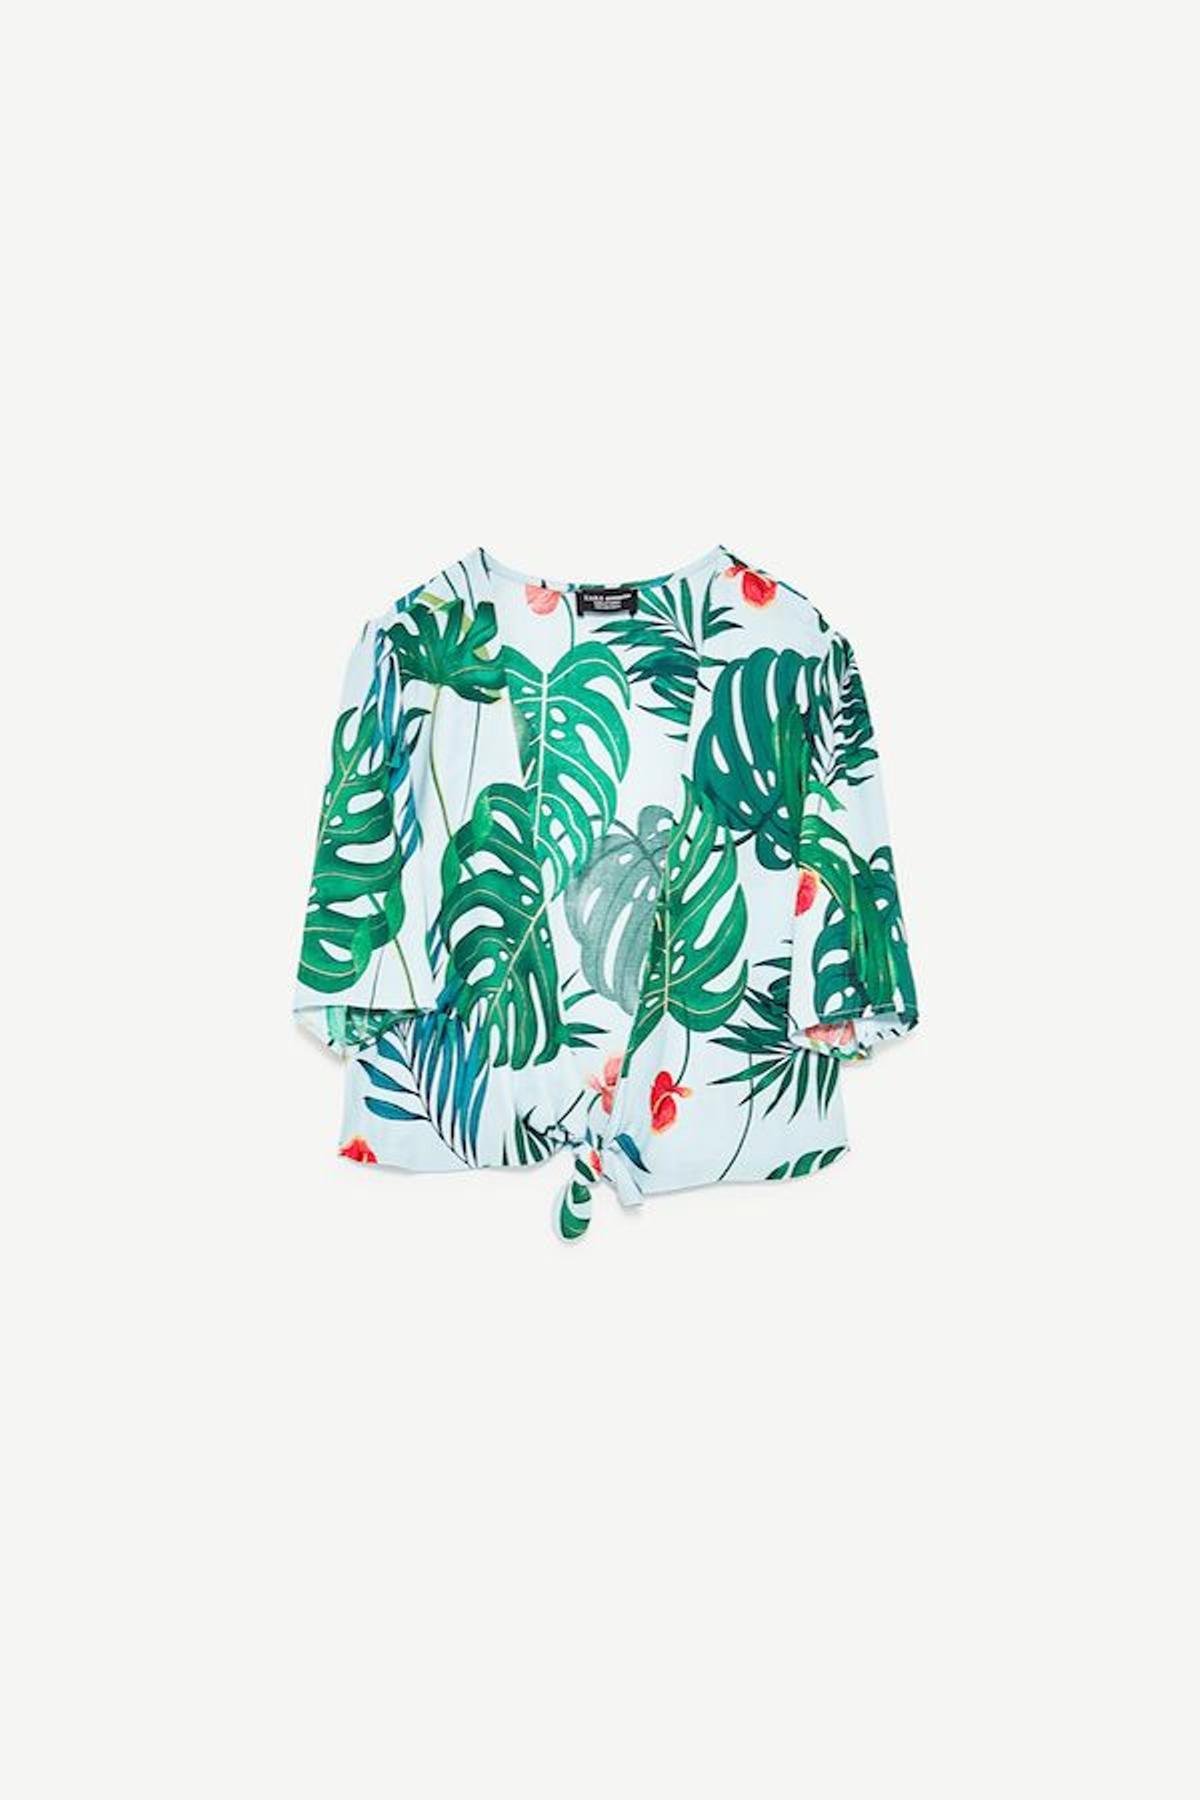 Prints manía: Blusa 'cropped' con estampado tropical, de Zara, 19,95 euros